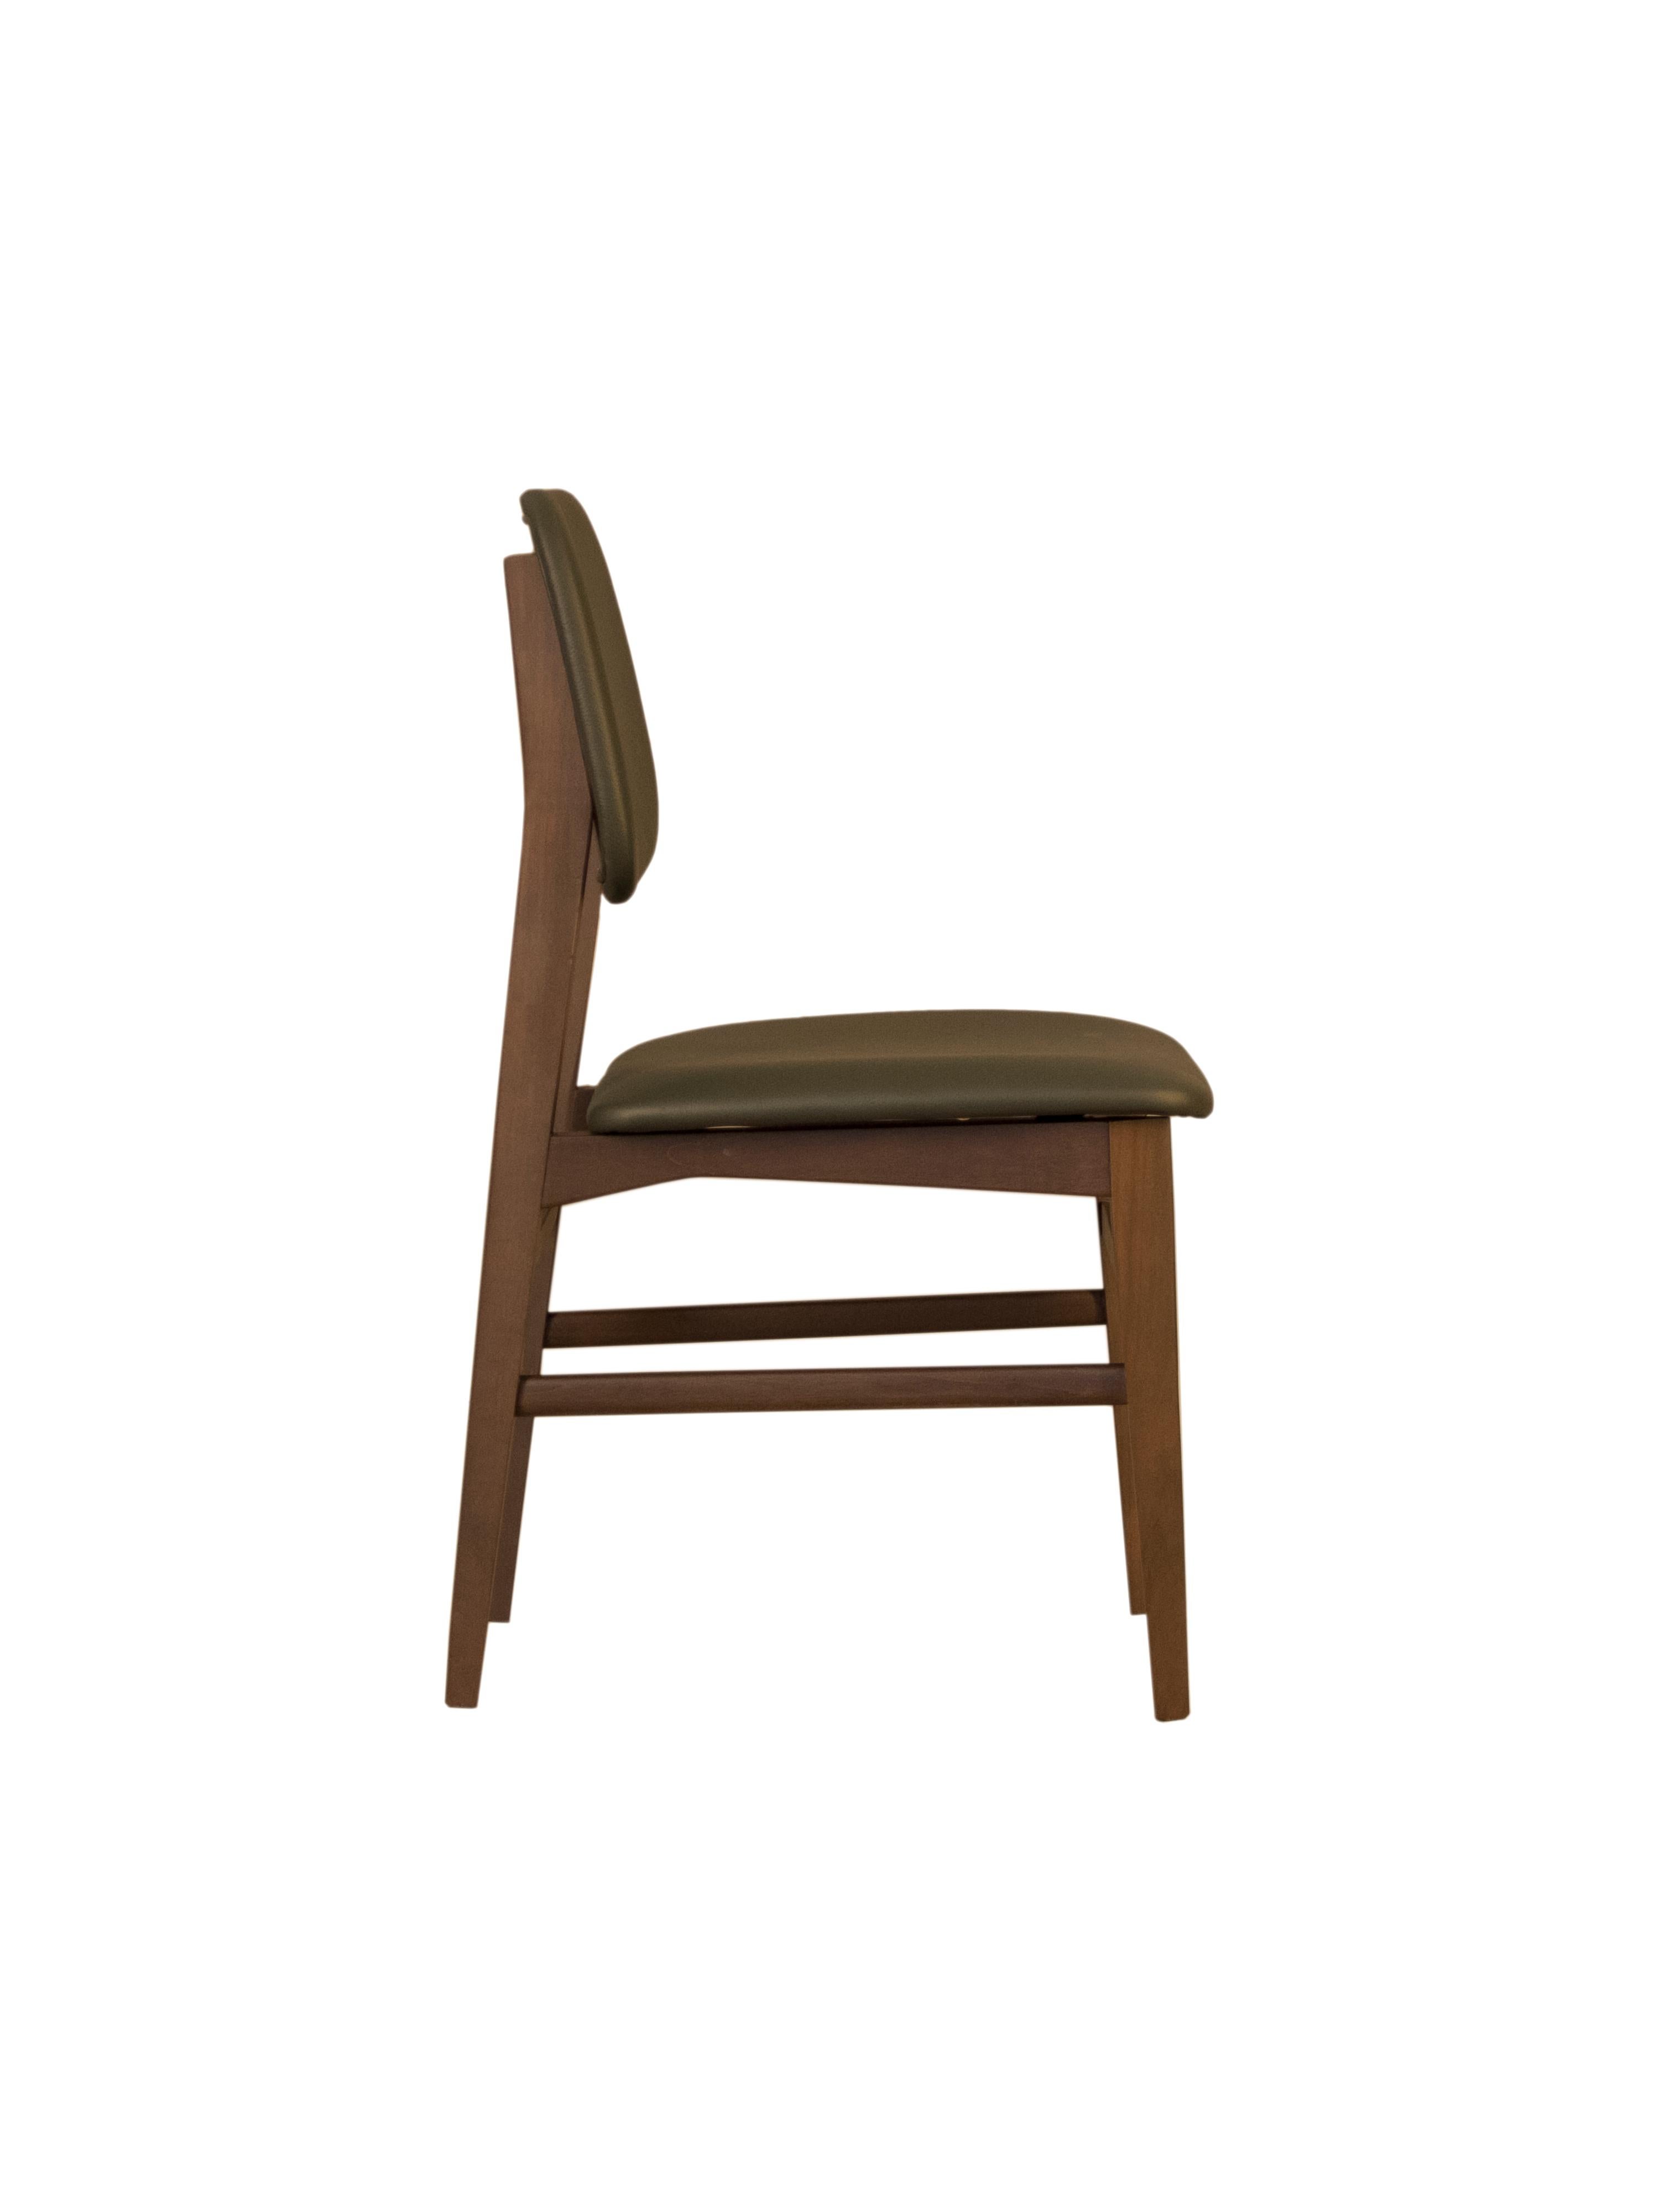 Morelato, Savina Chair in Ash Wood 5